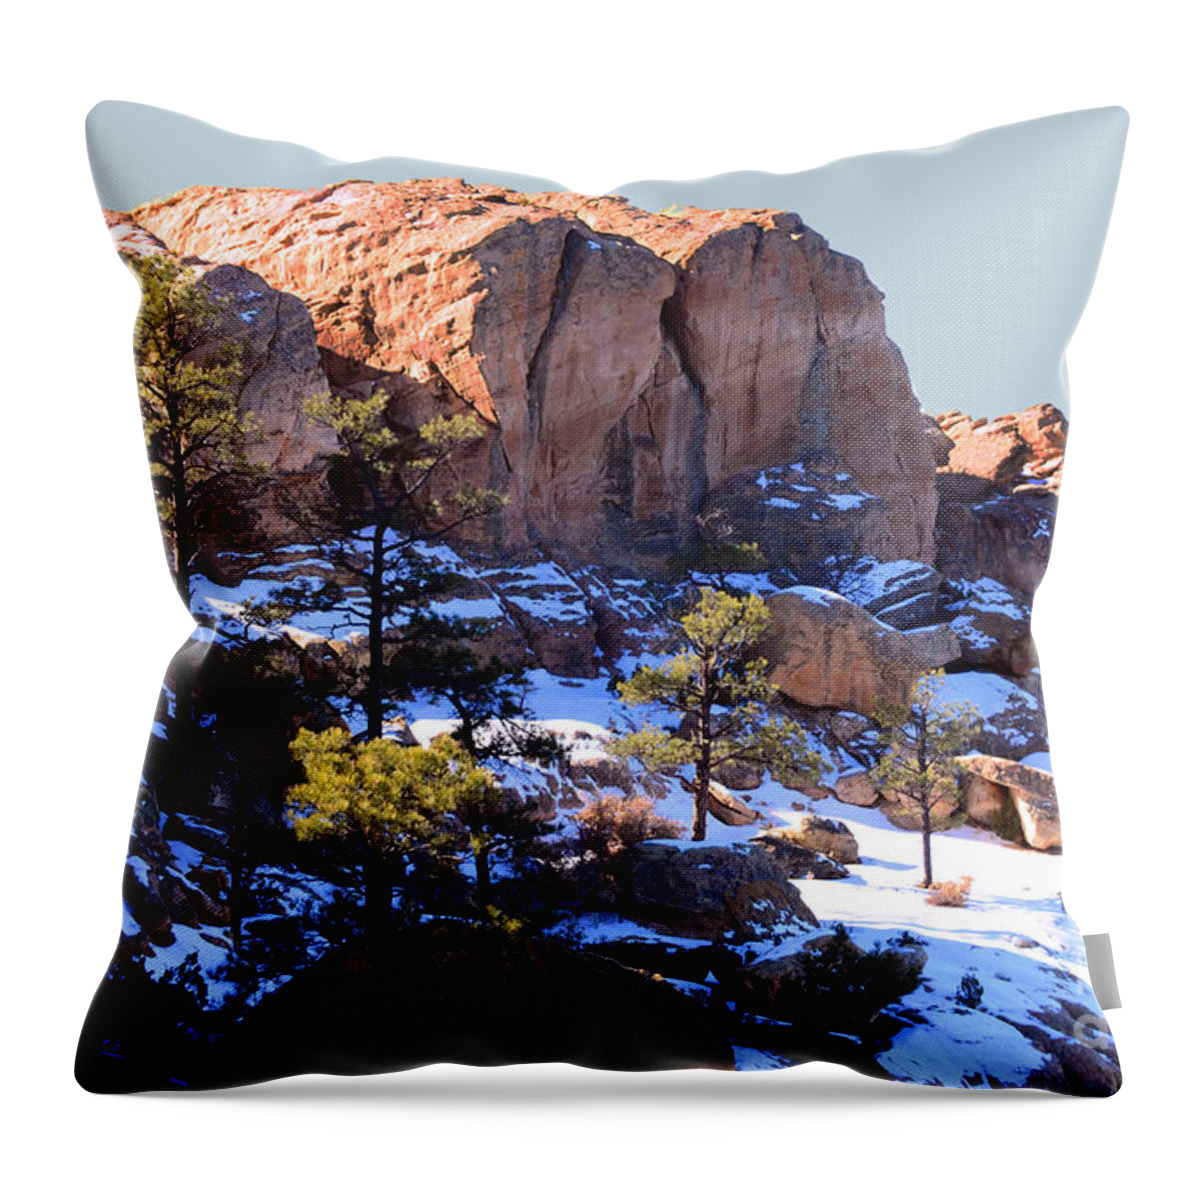 Southwest Landscape Throw Pillow featuring the photograph Cliff at El Malpais by Robert WK Clark